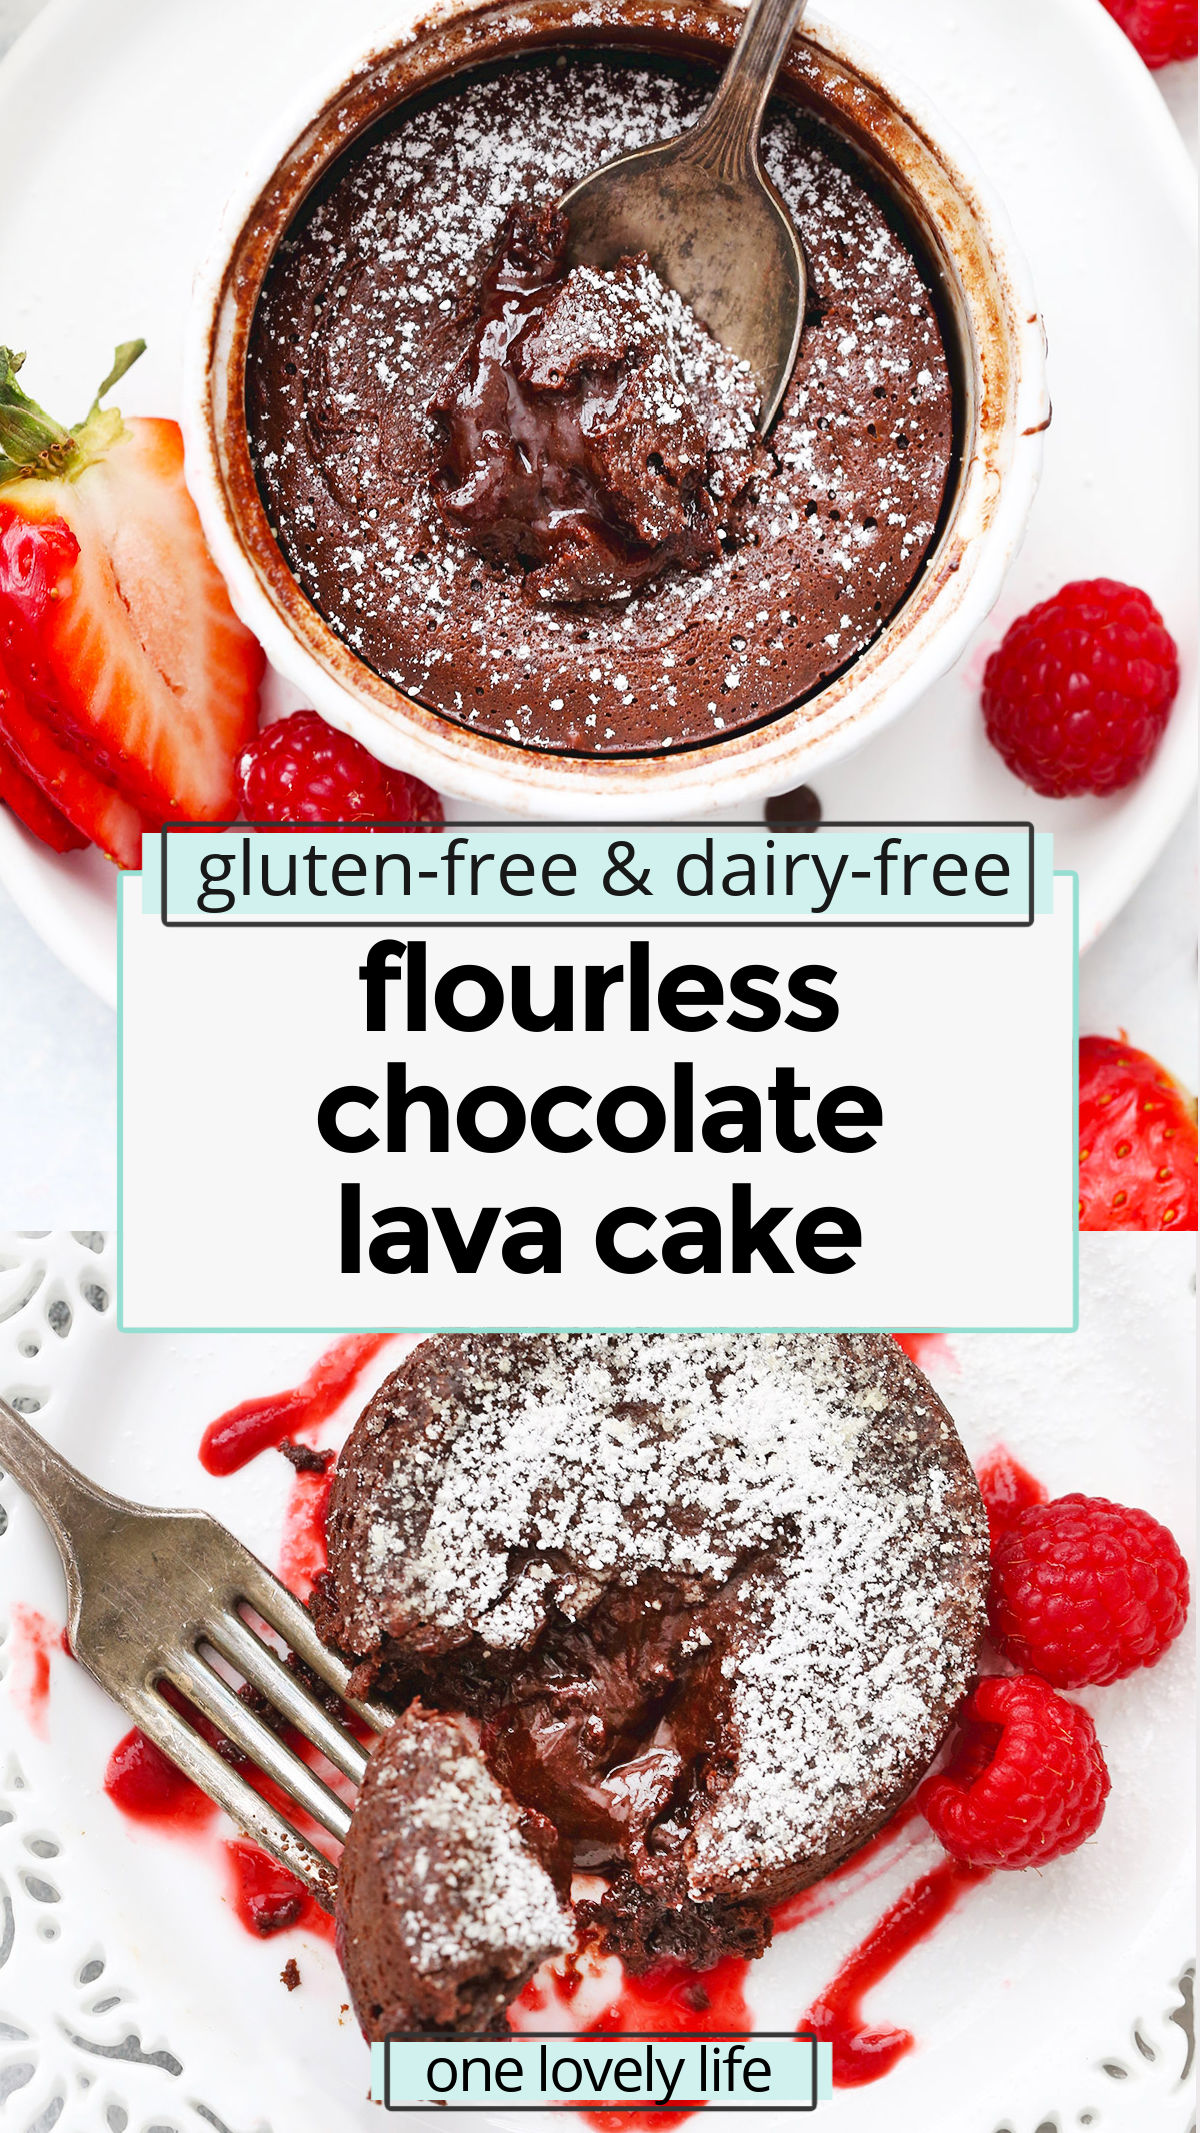 Paleo Chocolate Lava Cake - Super fudgy with a gooey molten chocolate filling, this flourless chocolate lava cake makes a perfect special occasion dessert! (Dairy-free, gluten-free, paleo) // Gluten Free Lava Cake // Paleo Lava Cake // dairy free lava cake // flourless lava cake // gluten free chocolate lava cake recipe // valentine's day dessert recipe //